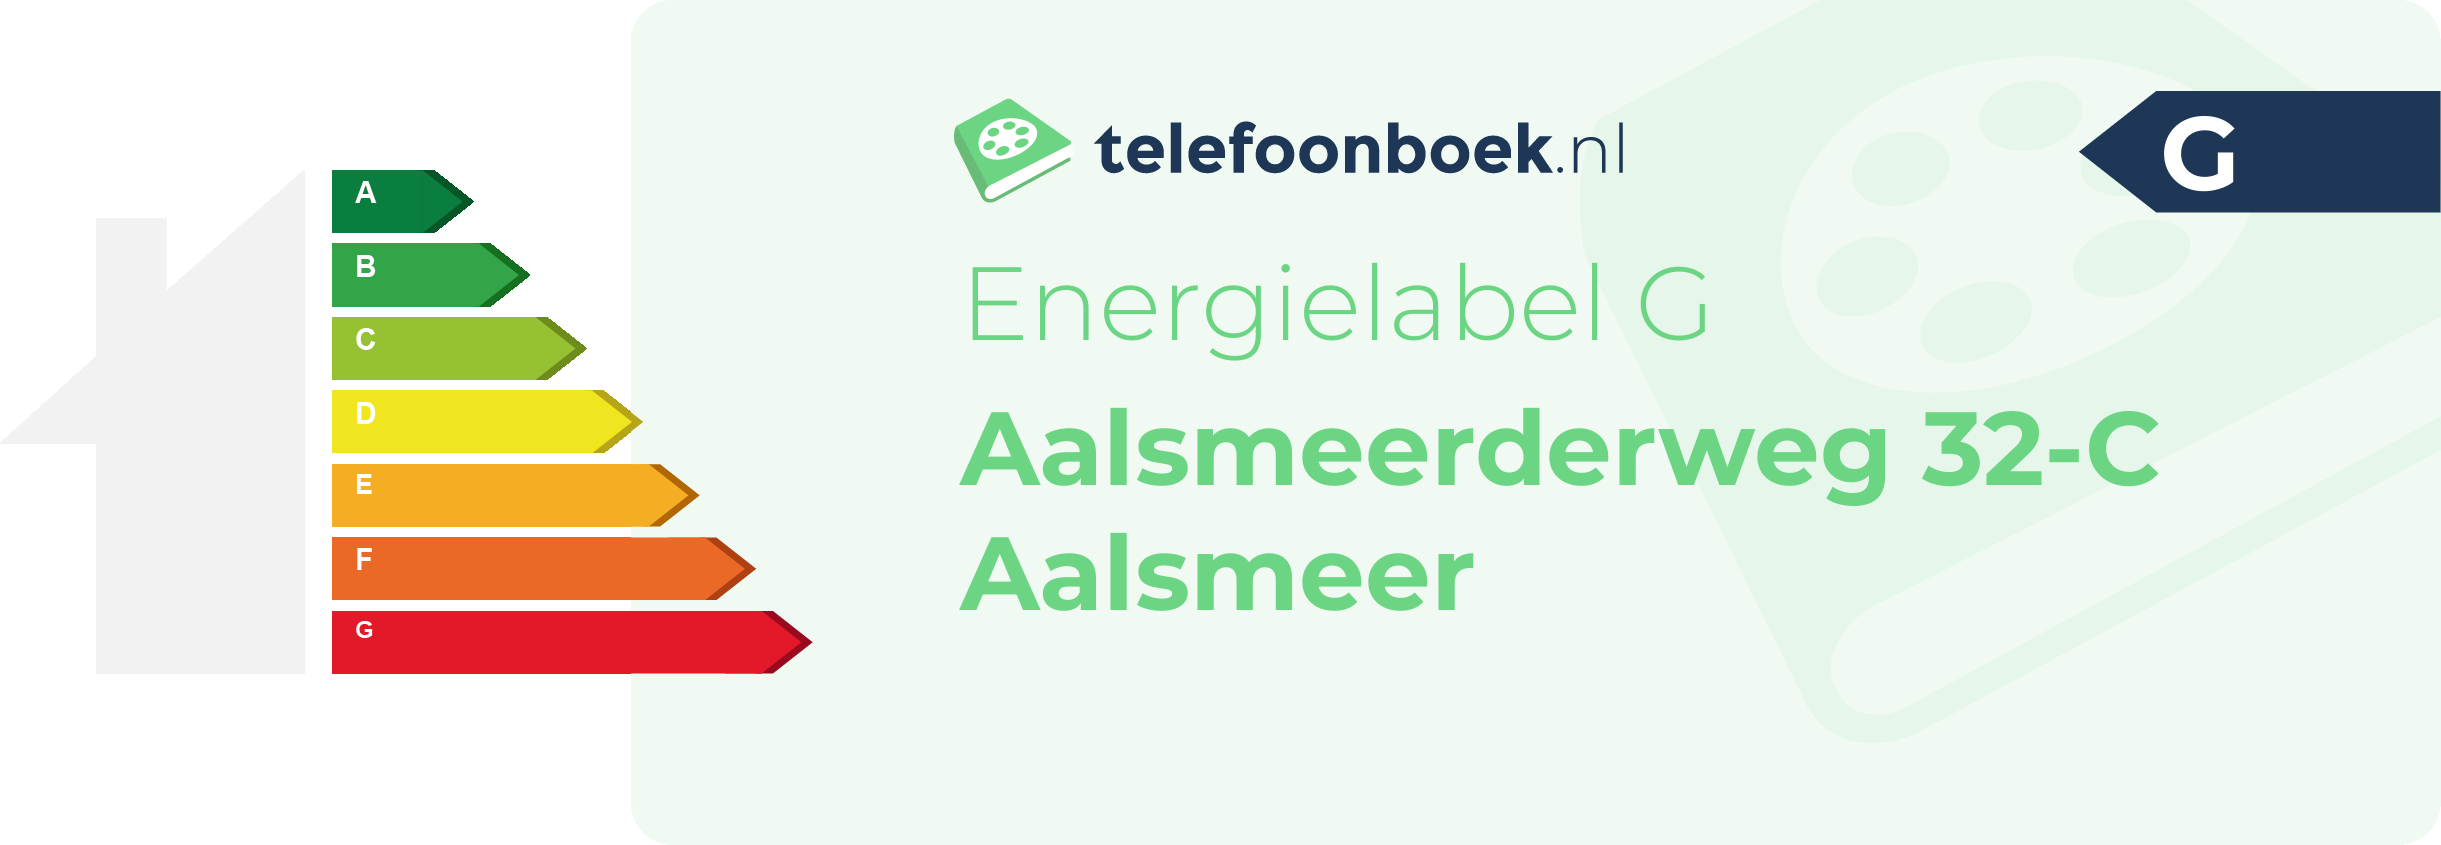 Energielabel Aalsmeerderweg 32-C Aalsmeer